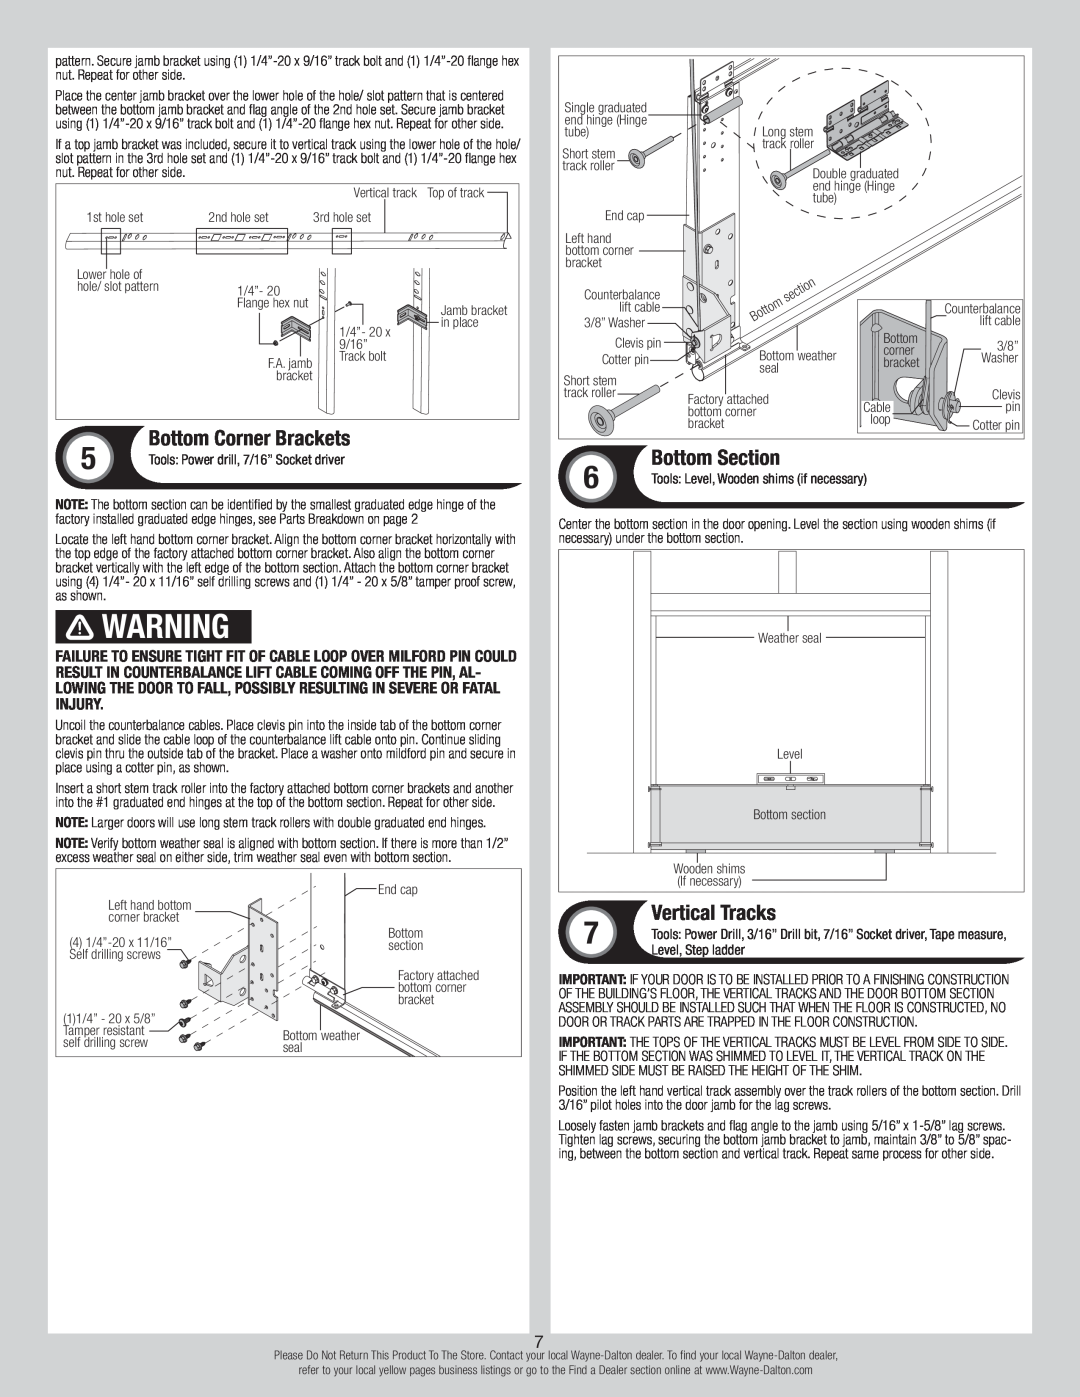 Wayne-Dalton 9800 installation instructions Bottom Section, Vertical Tracks, Bottom Corner Brackets 